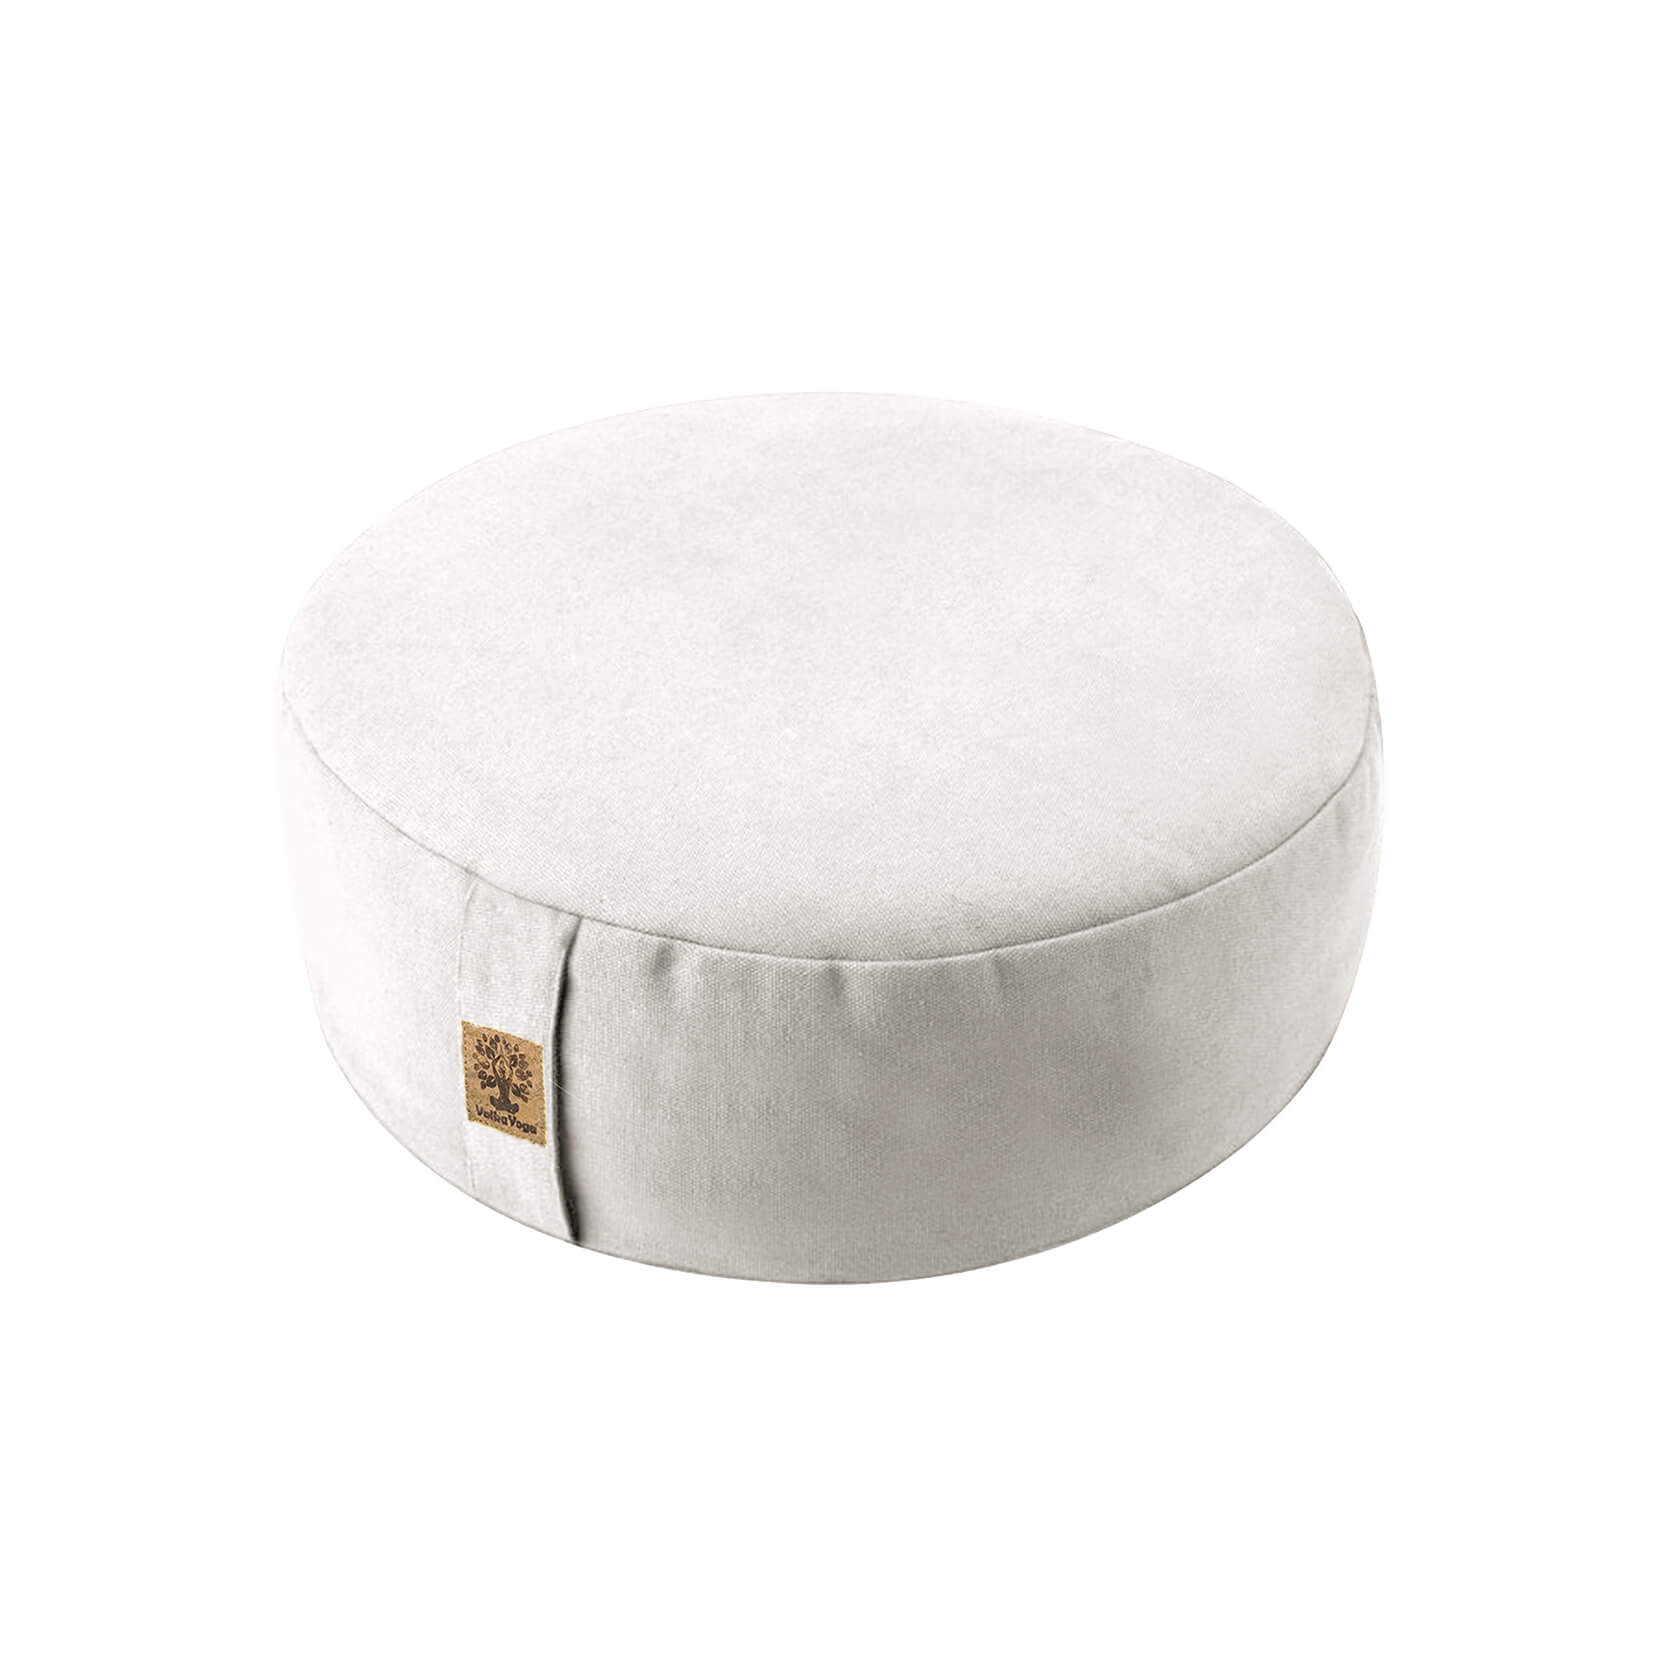 White cotton meditation cushion